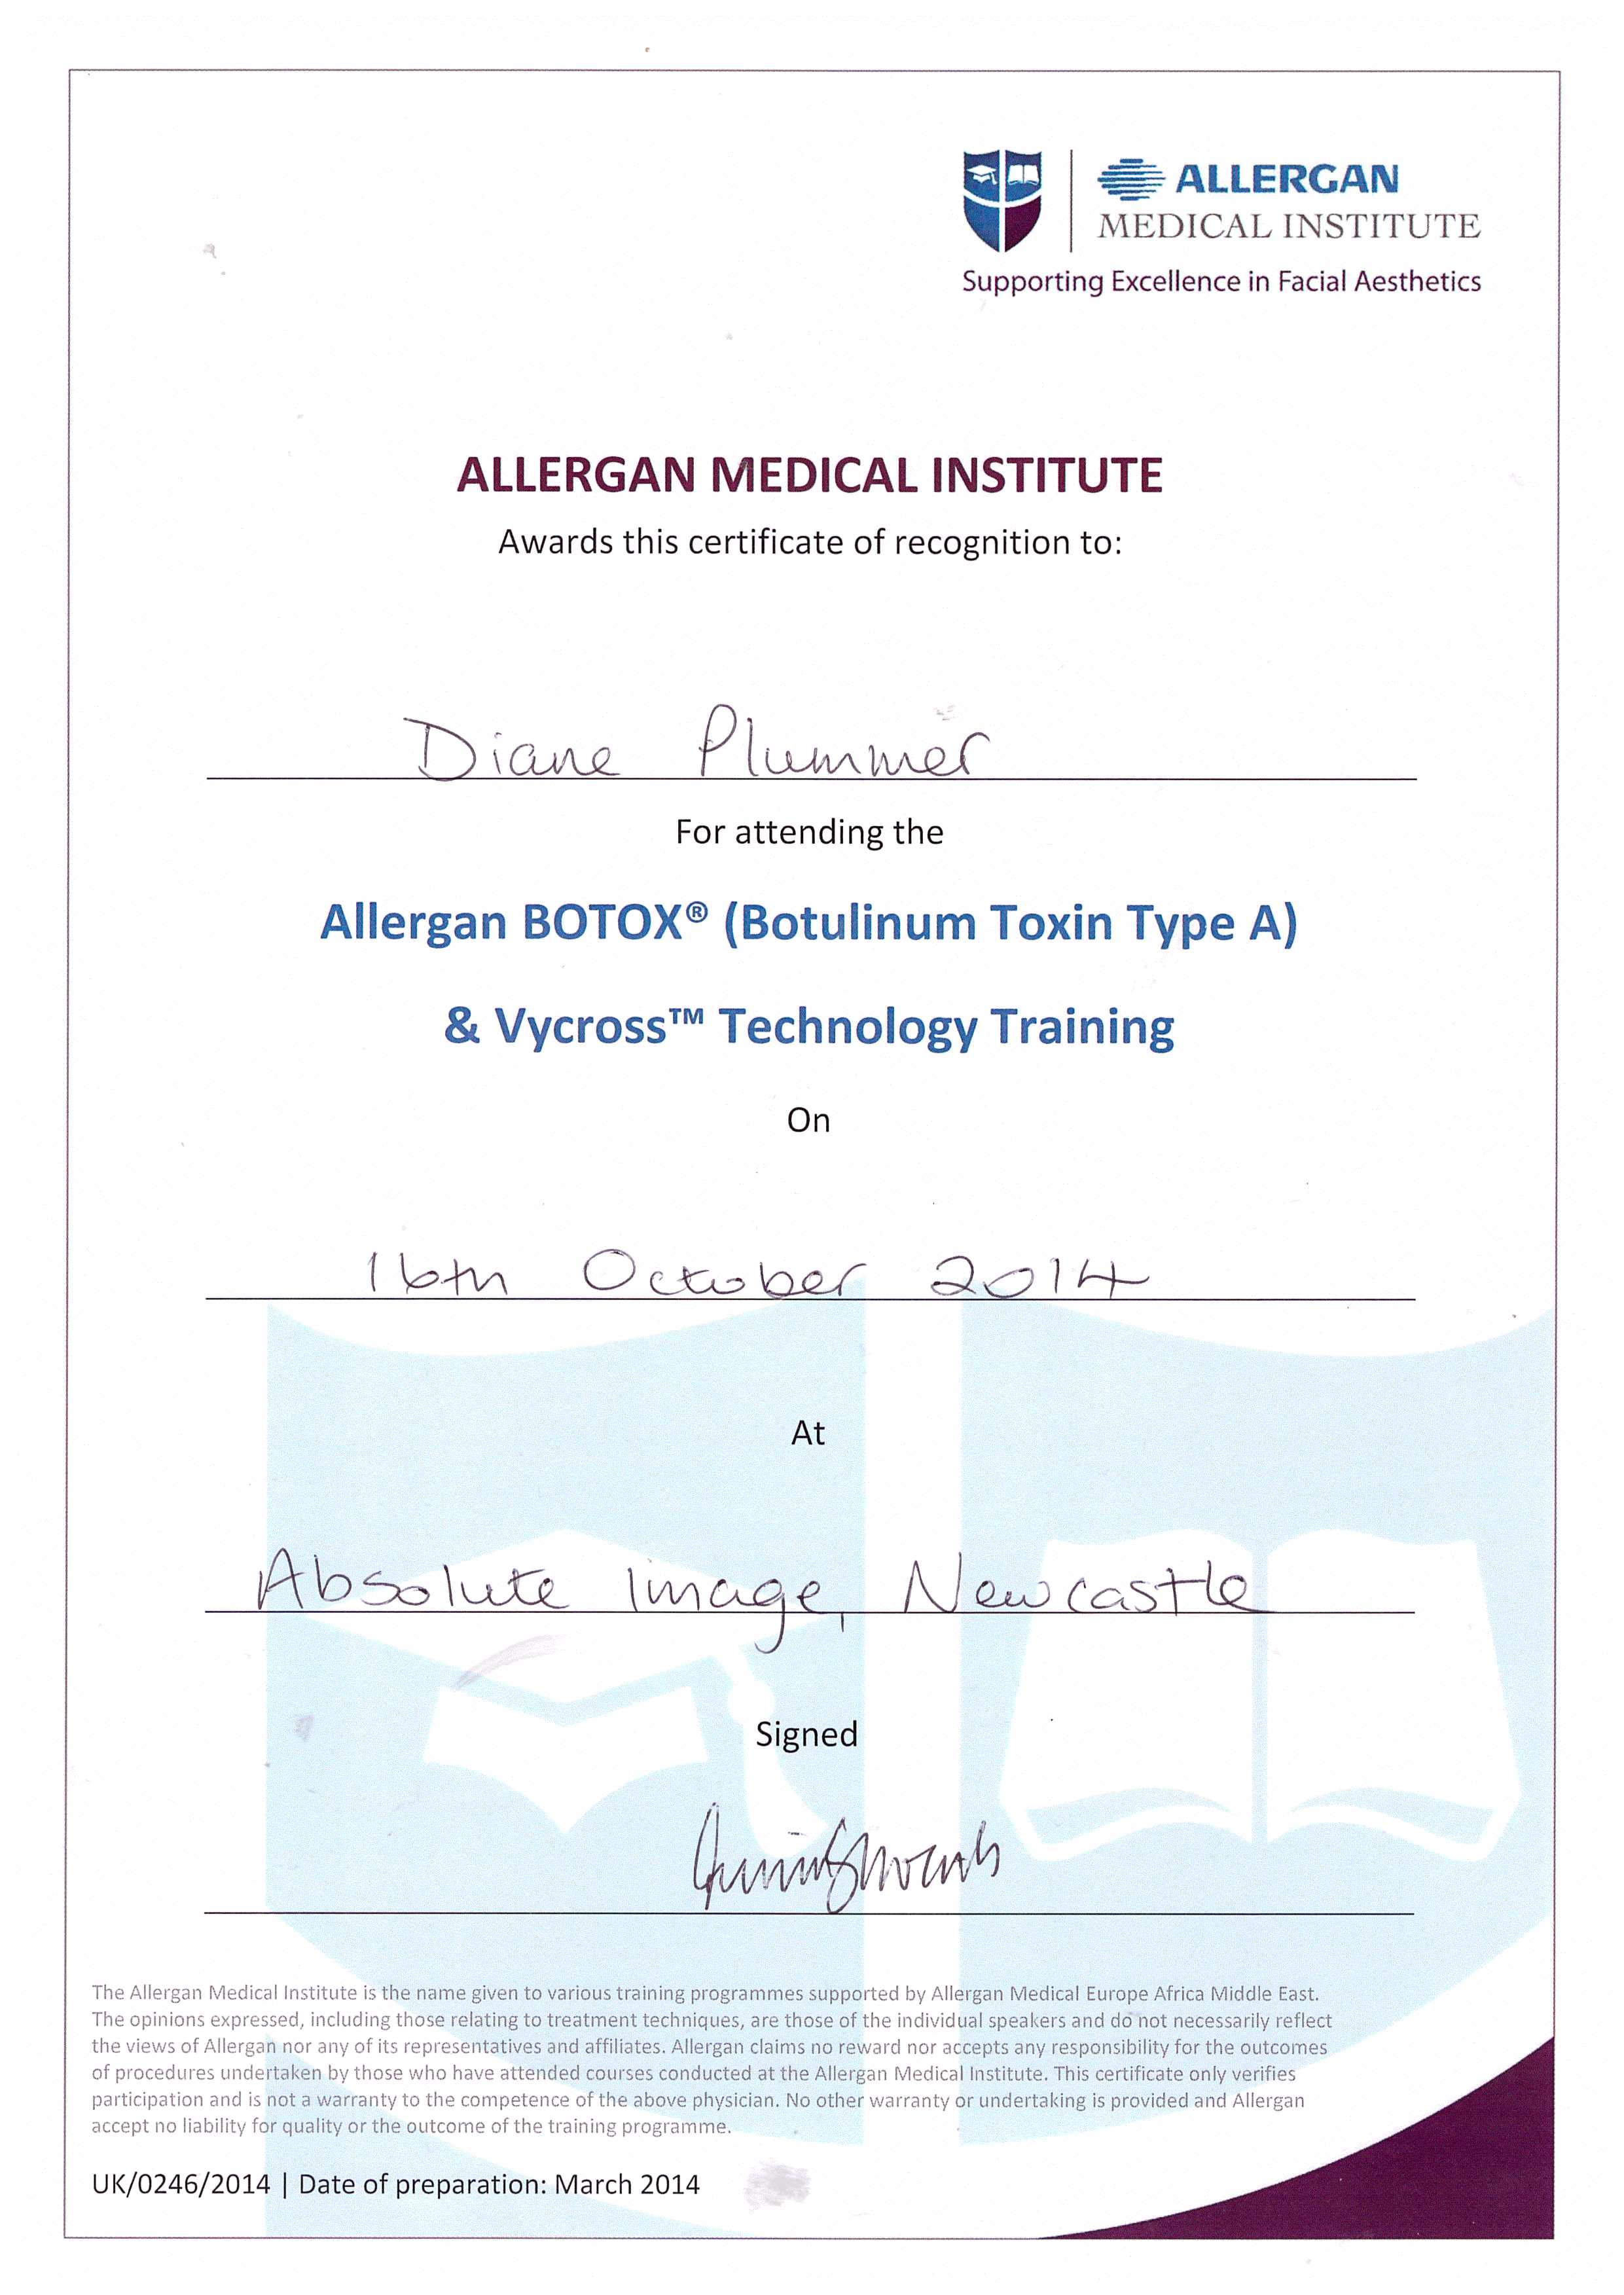 Allergan Medical Institute - Allergan BOTOX® (Botulinum Toxin Type A) & Vycross™ Technology Training